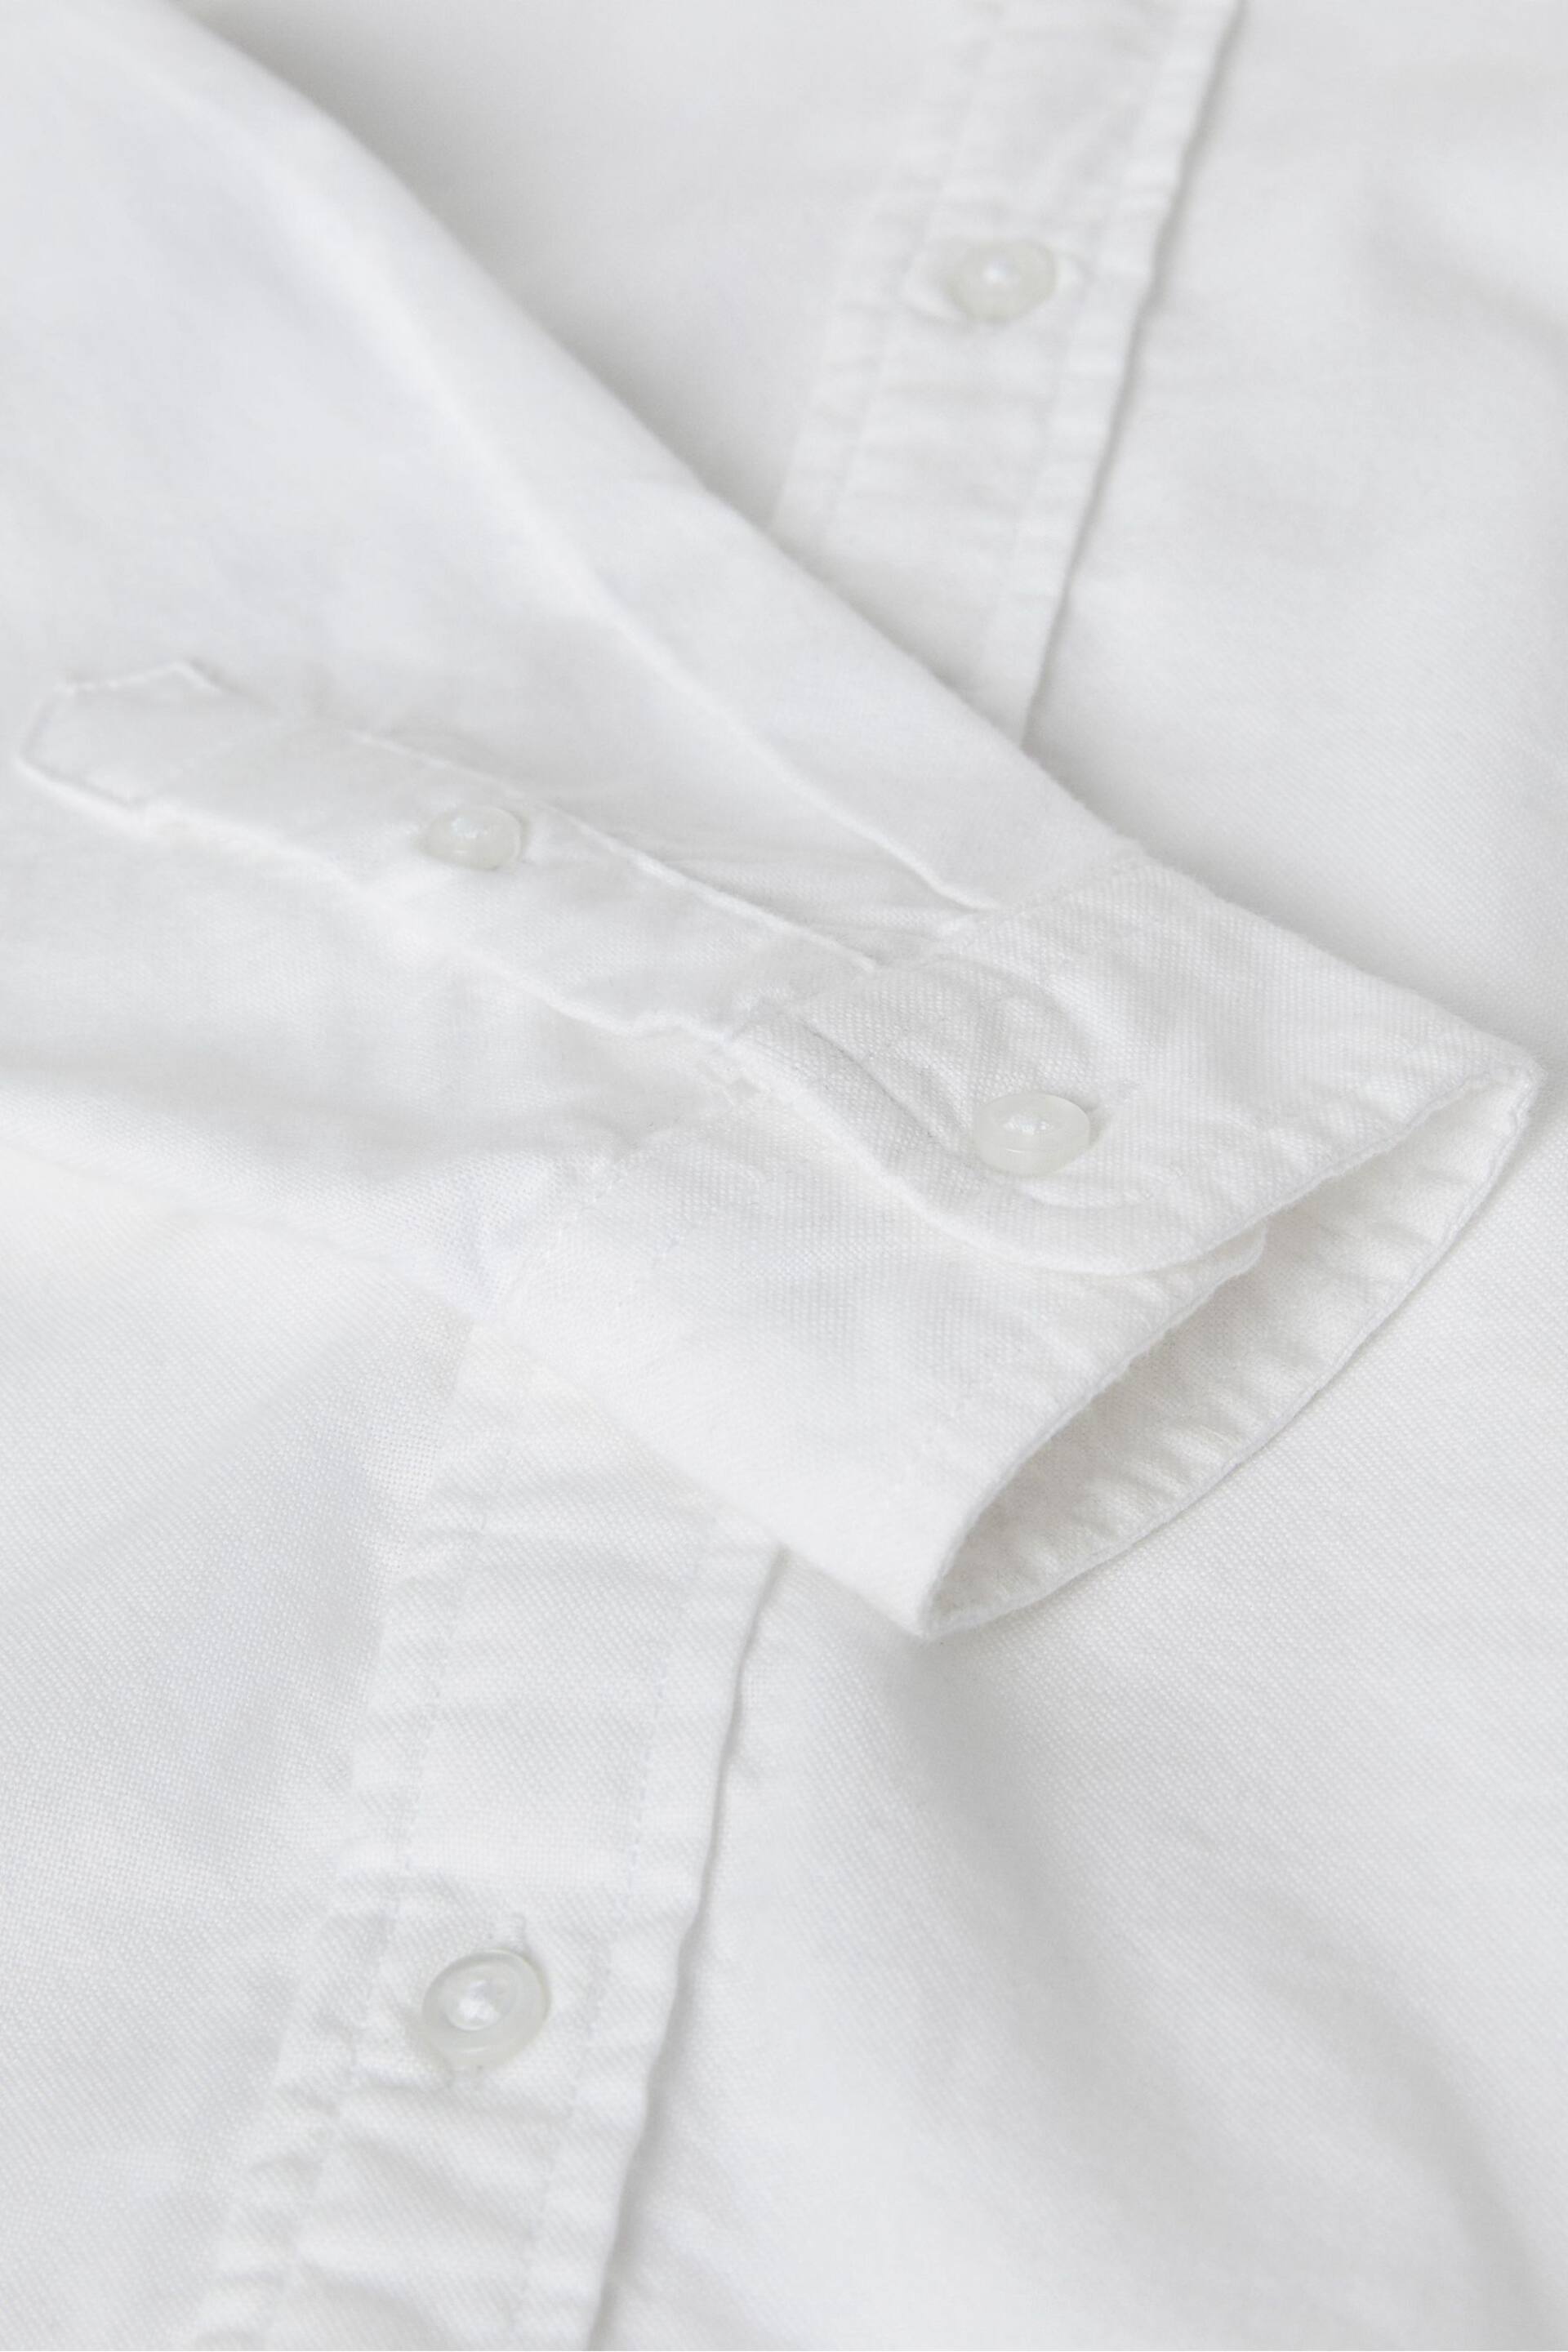 Polarn O Pyret White Organic Cotton Oxford Shirt - Image 3 of 4